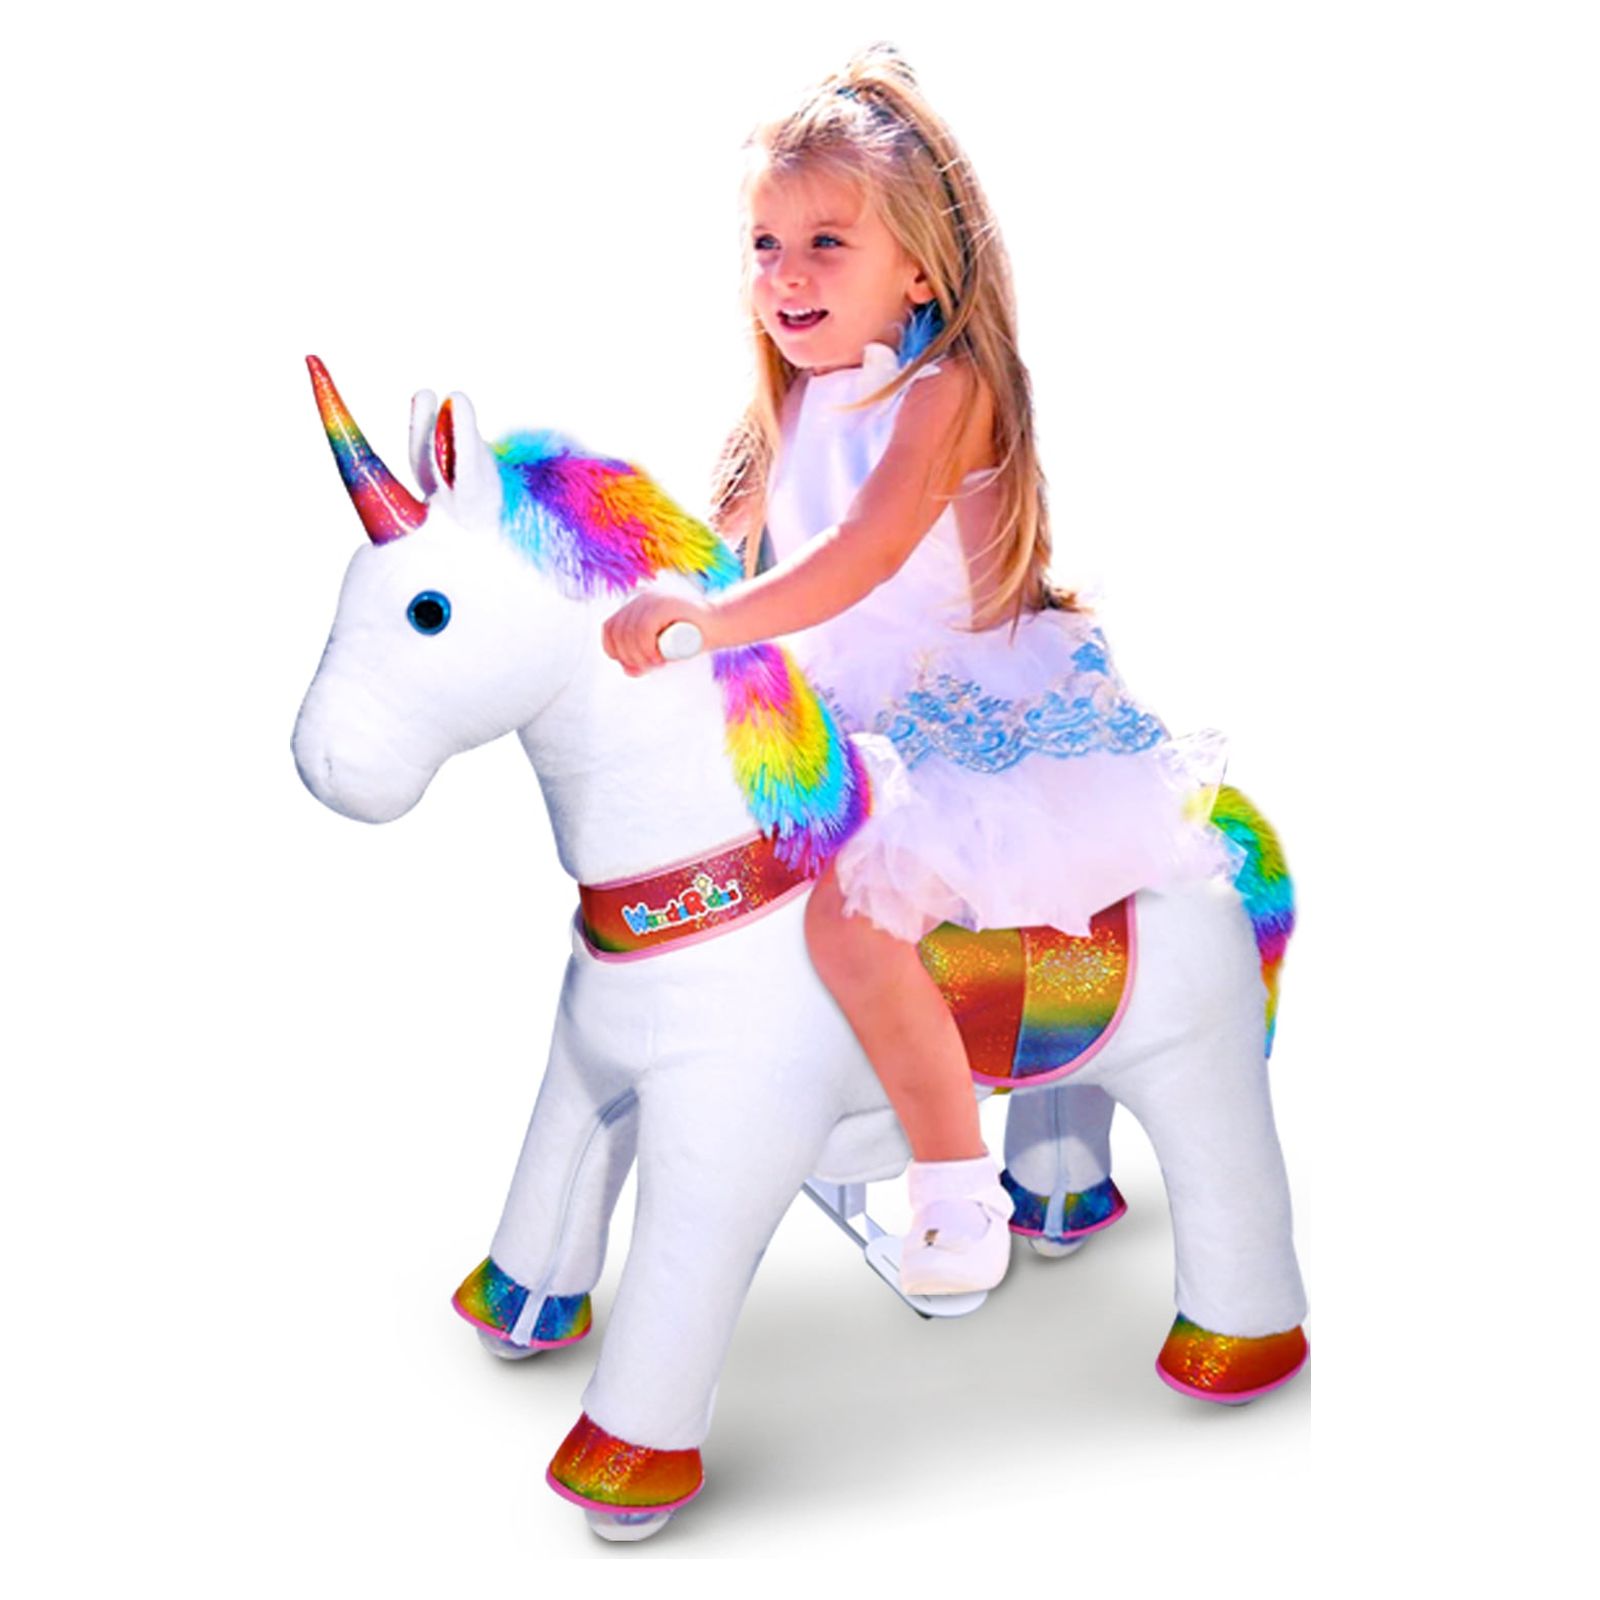 WondeRides Ride on Rainbow Unicorn Horse, Rocking Horse Riding Pony Toy (Medium Size 4, Height 36 Inch) for Ages 4-9 Years Kids Toys, Mechanical Moving Giddy up Walking Horse Plush Animal with Wheels - image 1 of 10